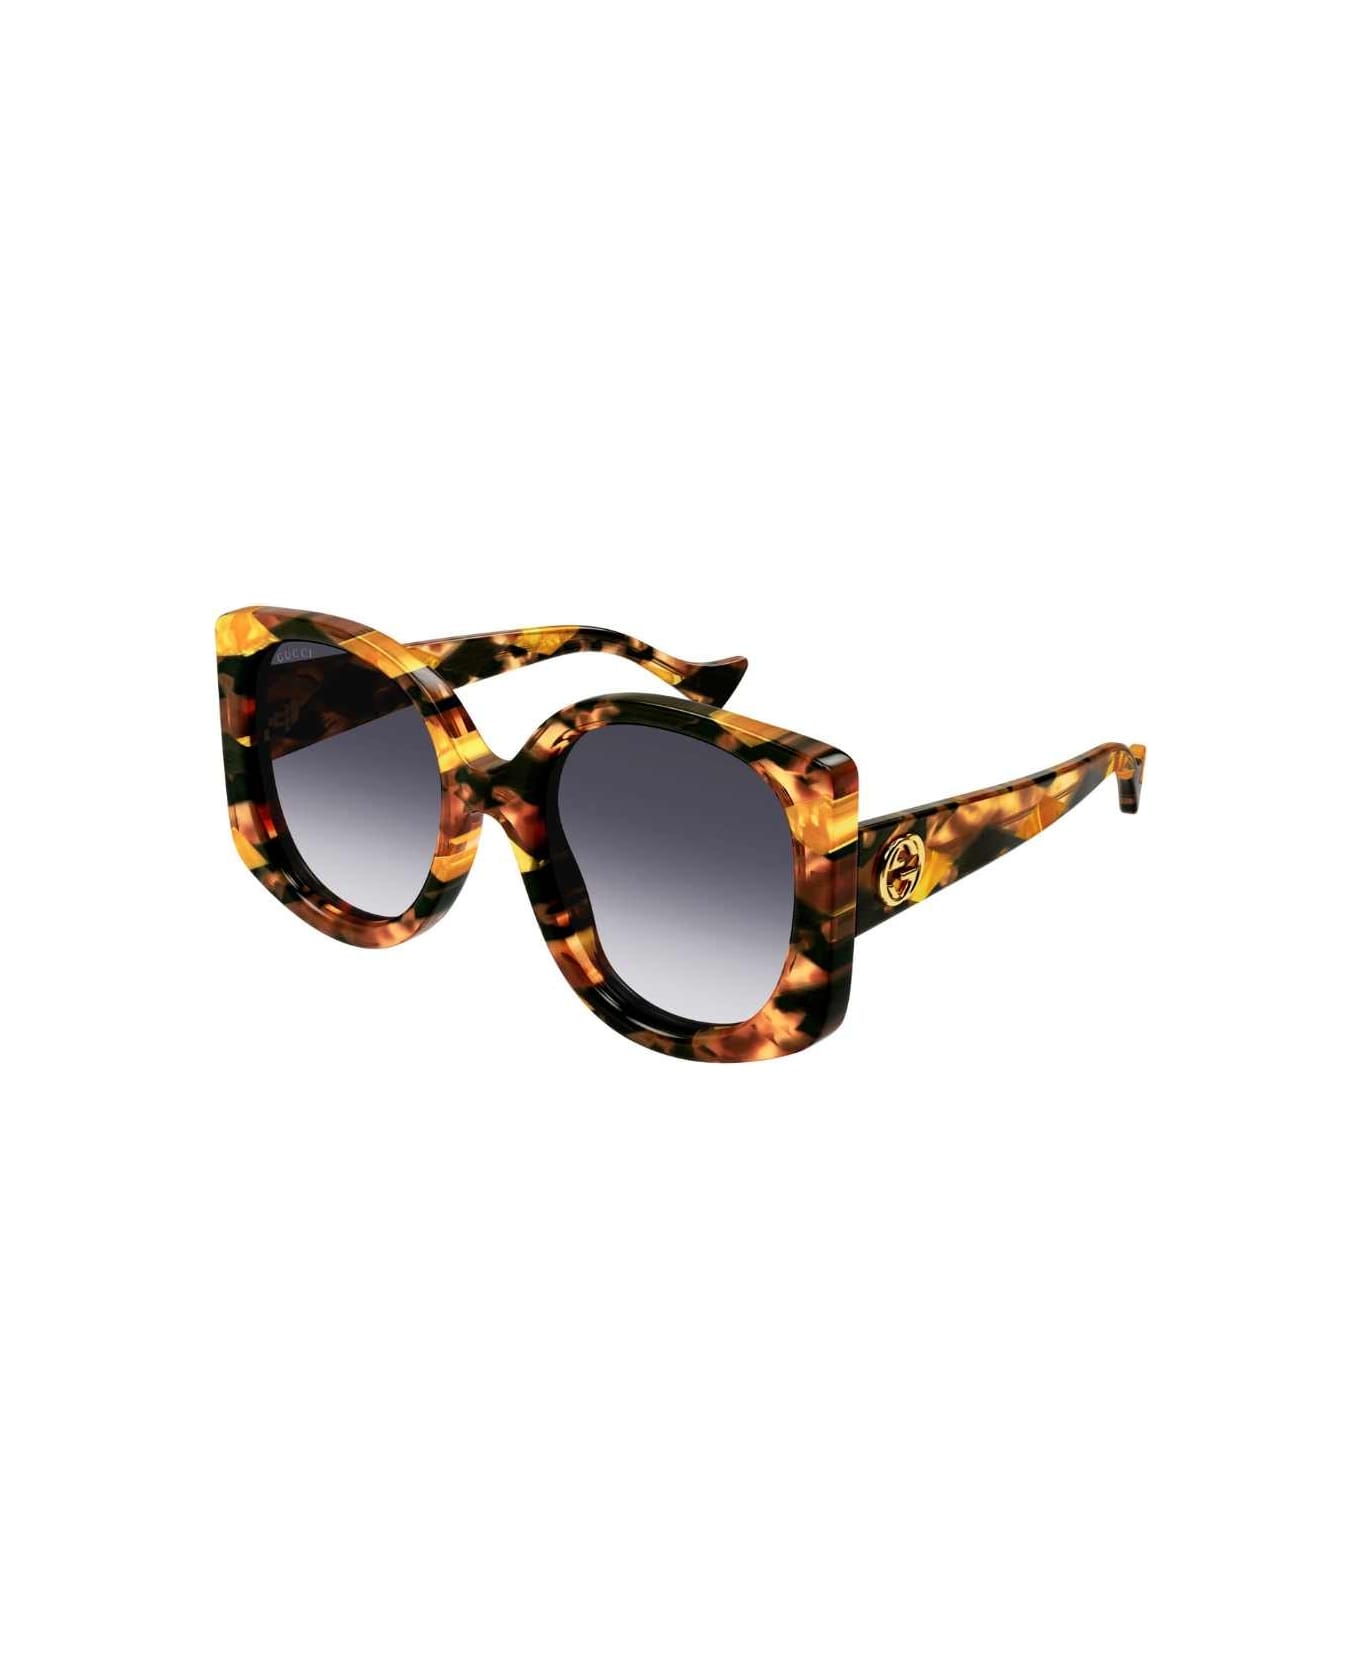 Gucci Eyewear Sunglasses - Havana/Grigio